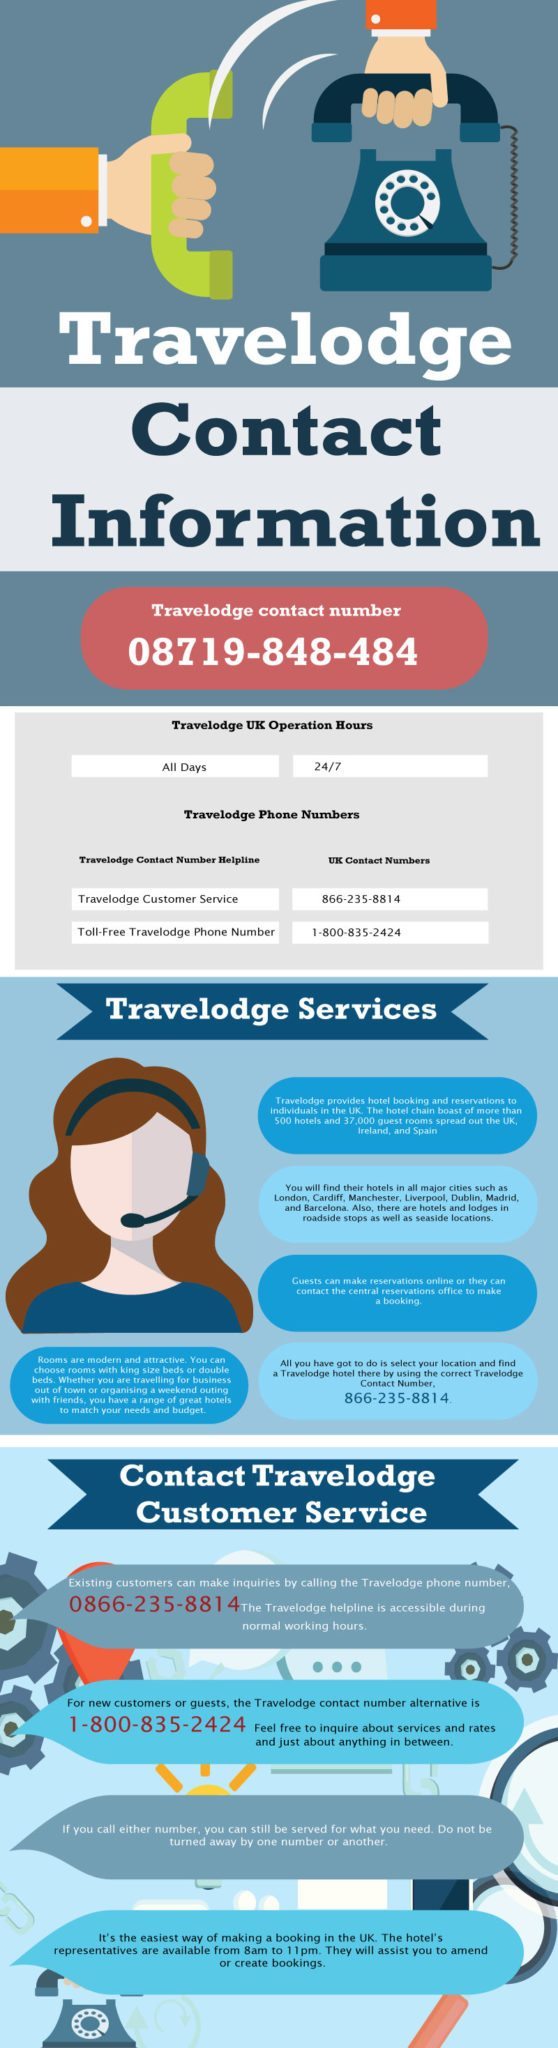 Travelodge Customer Service 00355680906050 Phone Number Uk 